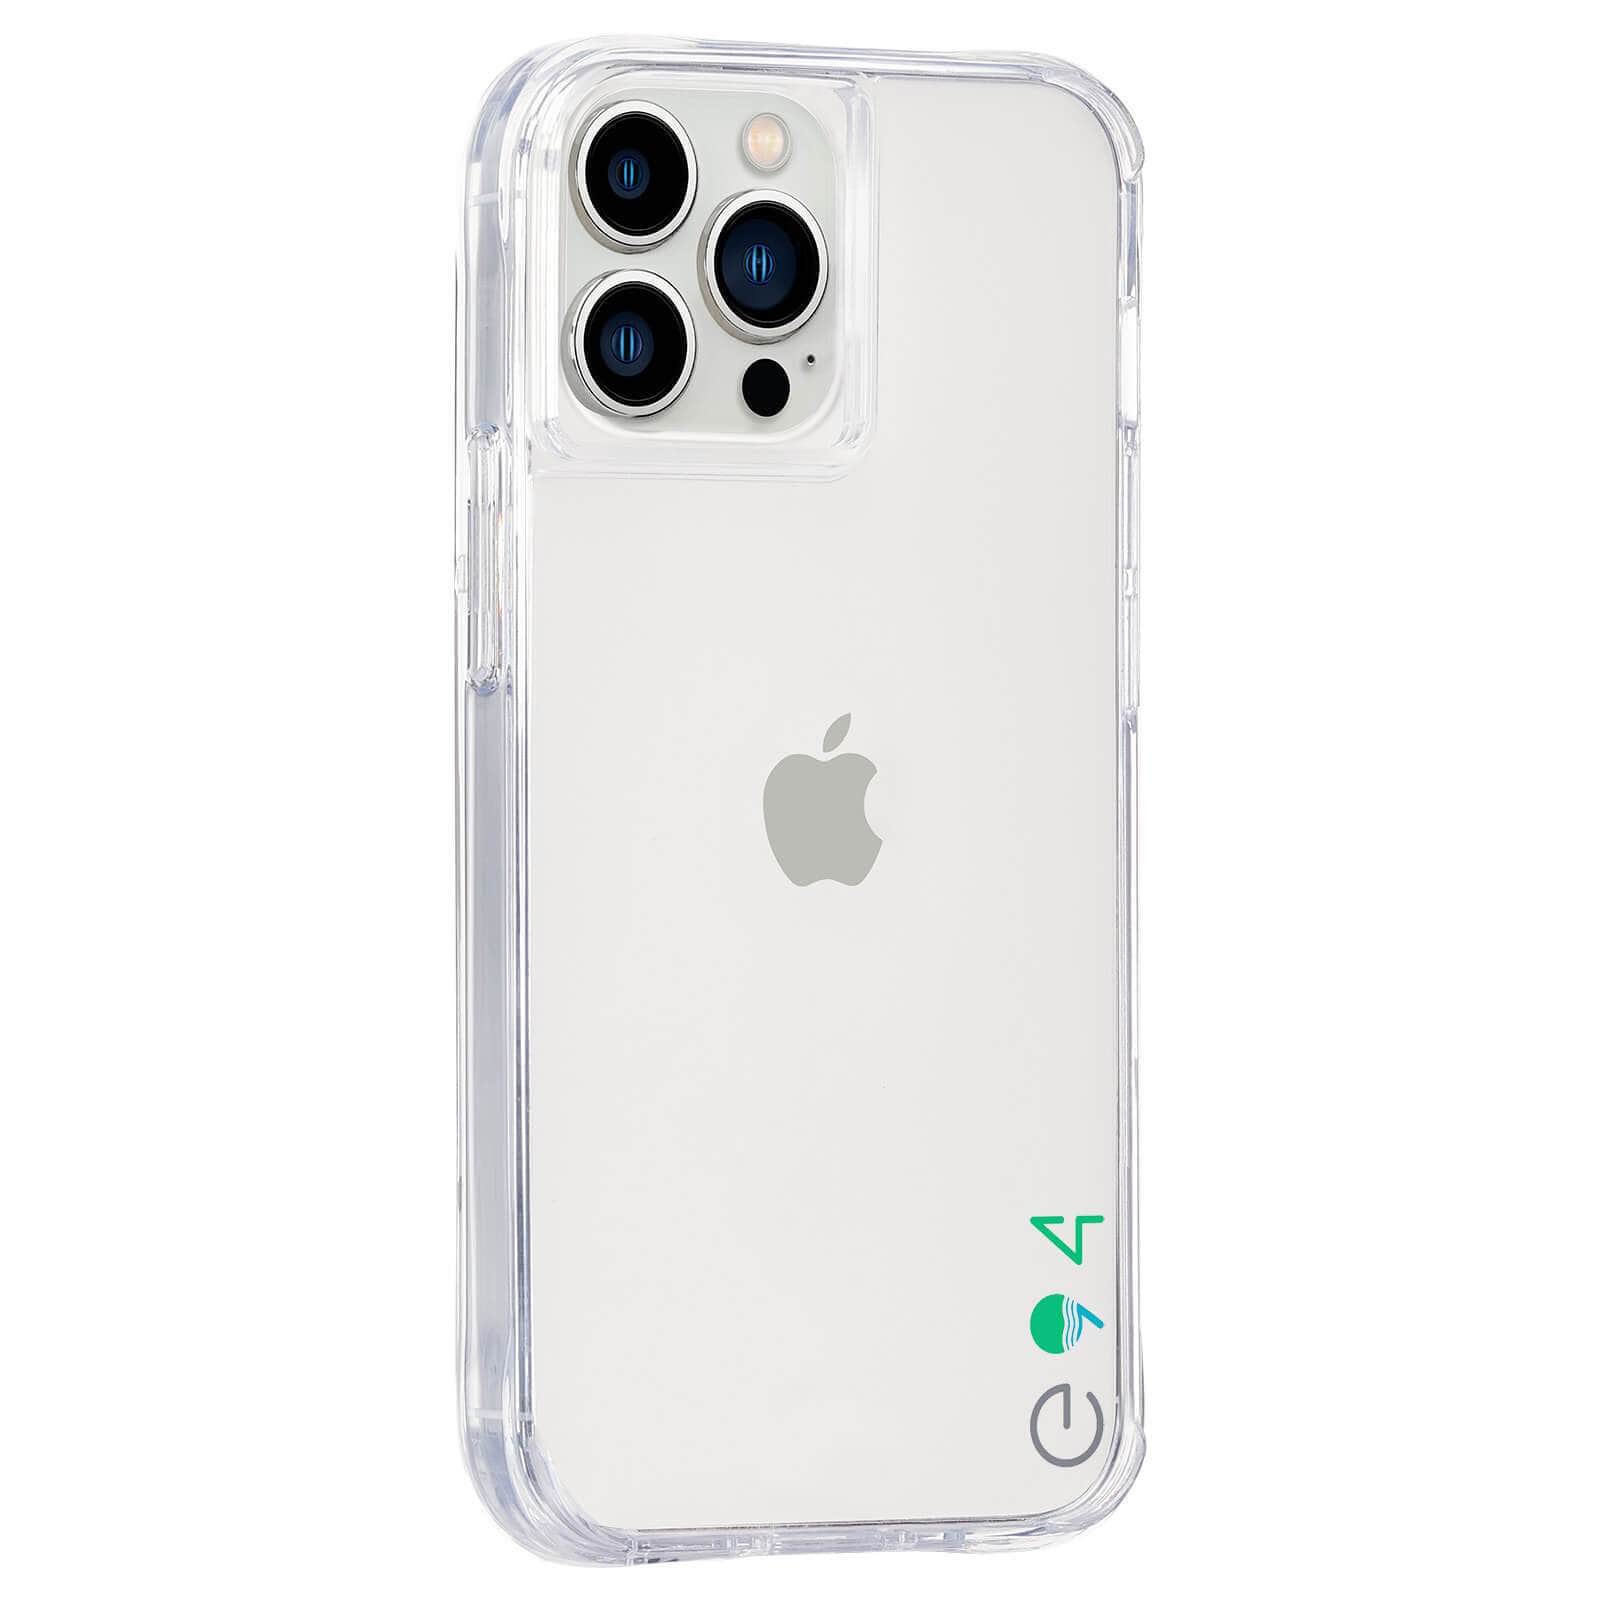 Neon Green Crystal Clear iPhone Case – Felony Case